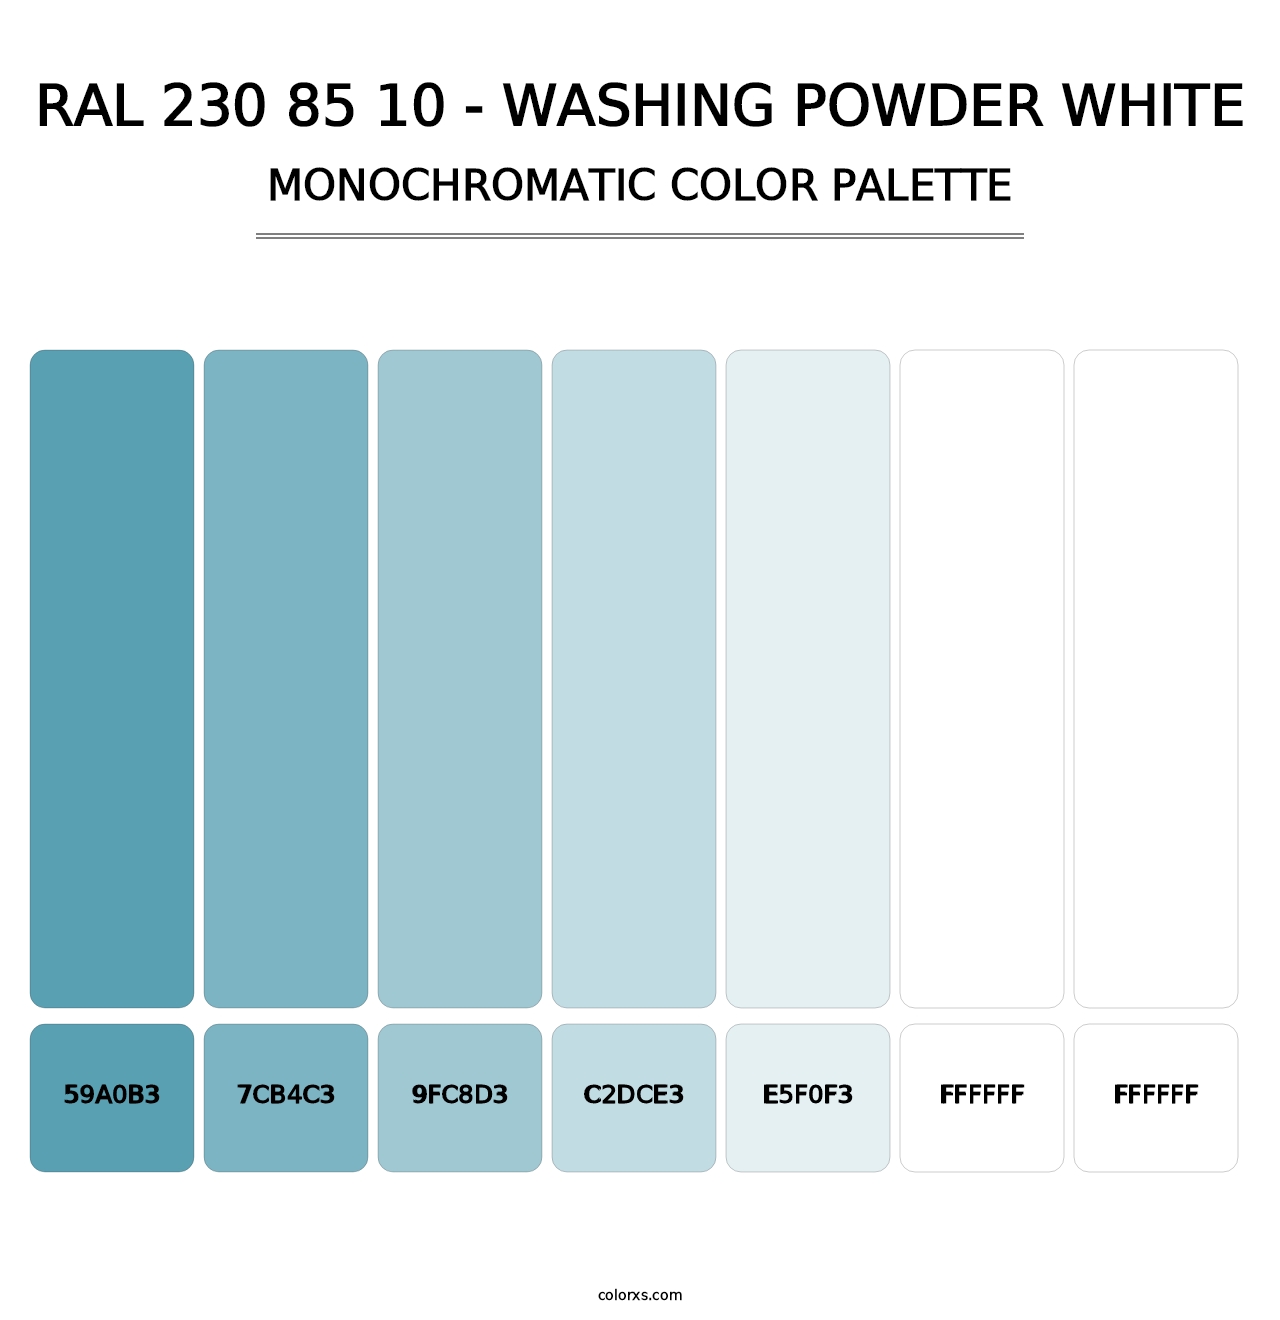 RAL 230 85 10 - Washing Powder White - Monochromatic Color Palette